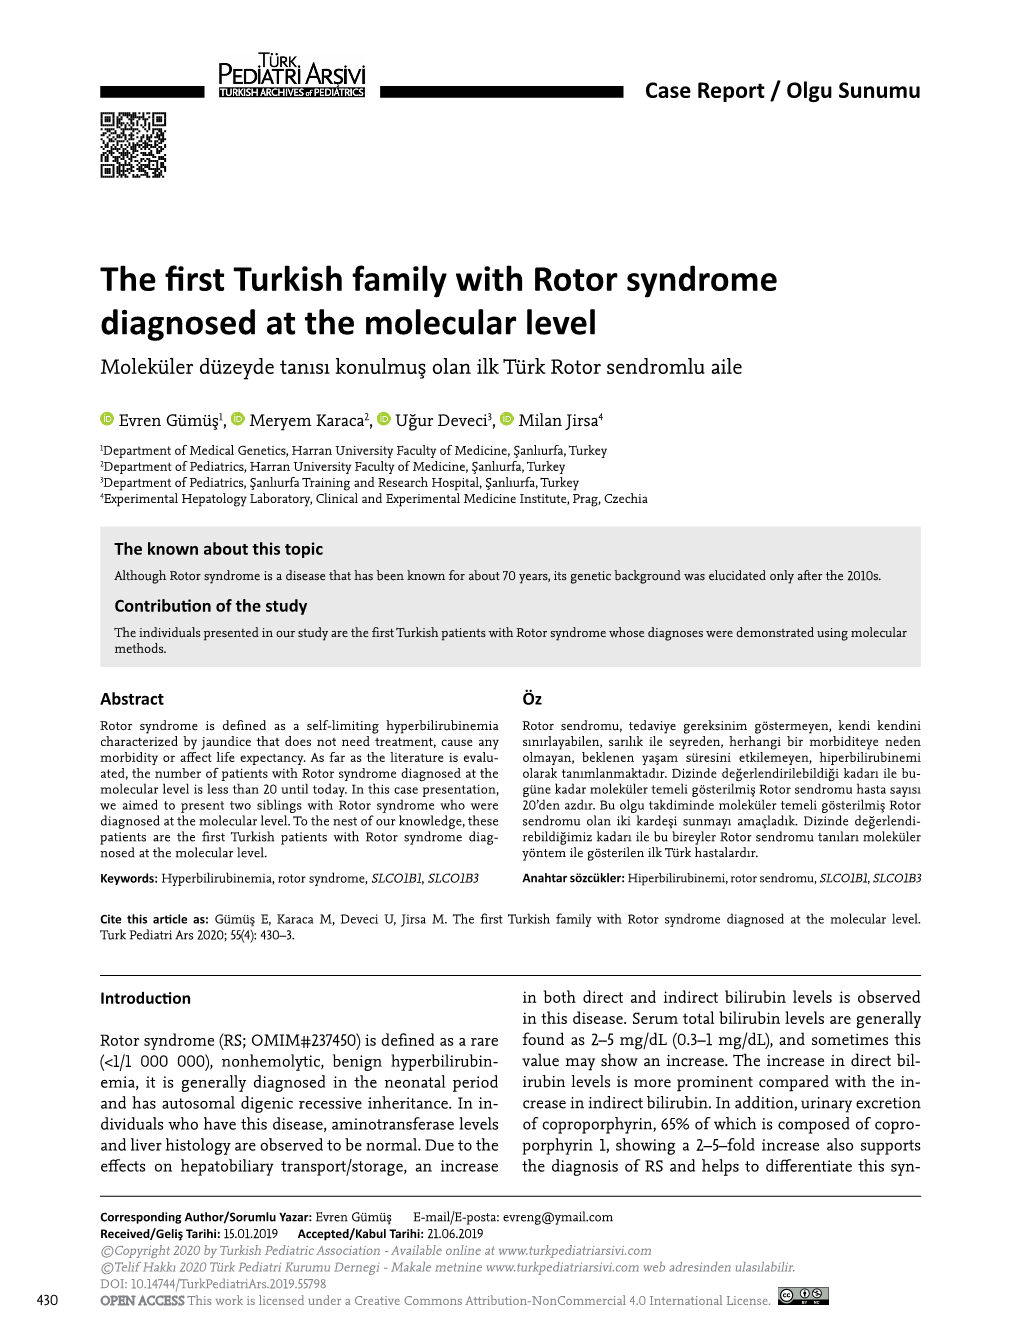 The First Turkish Family with Rotor Syndrome Diagnosed at the Molecular Level Moleküler Düzeyde Tanısı Konulmuş Olan Ilk Türk Rotor Sendromlu Aile